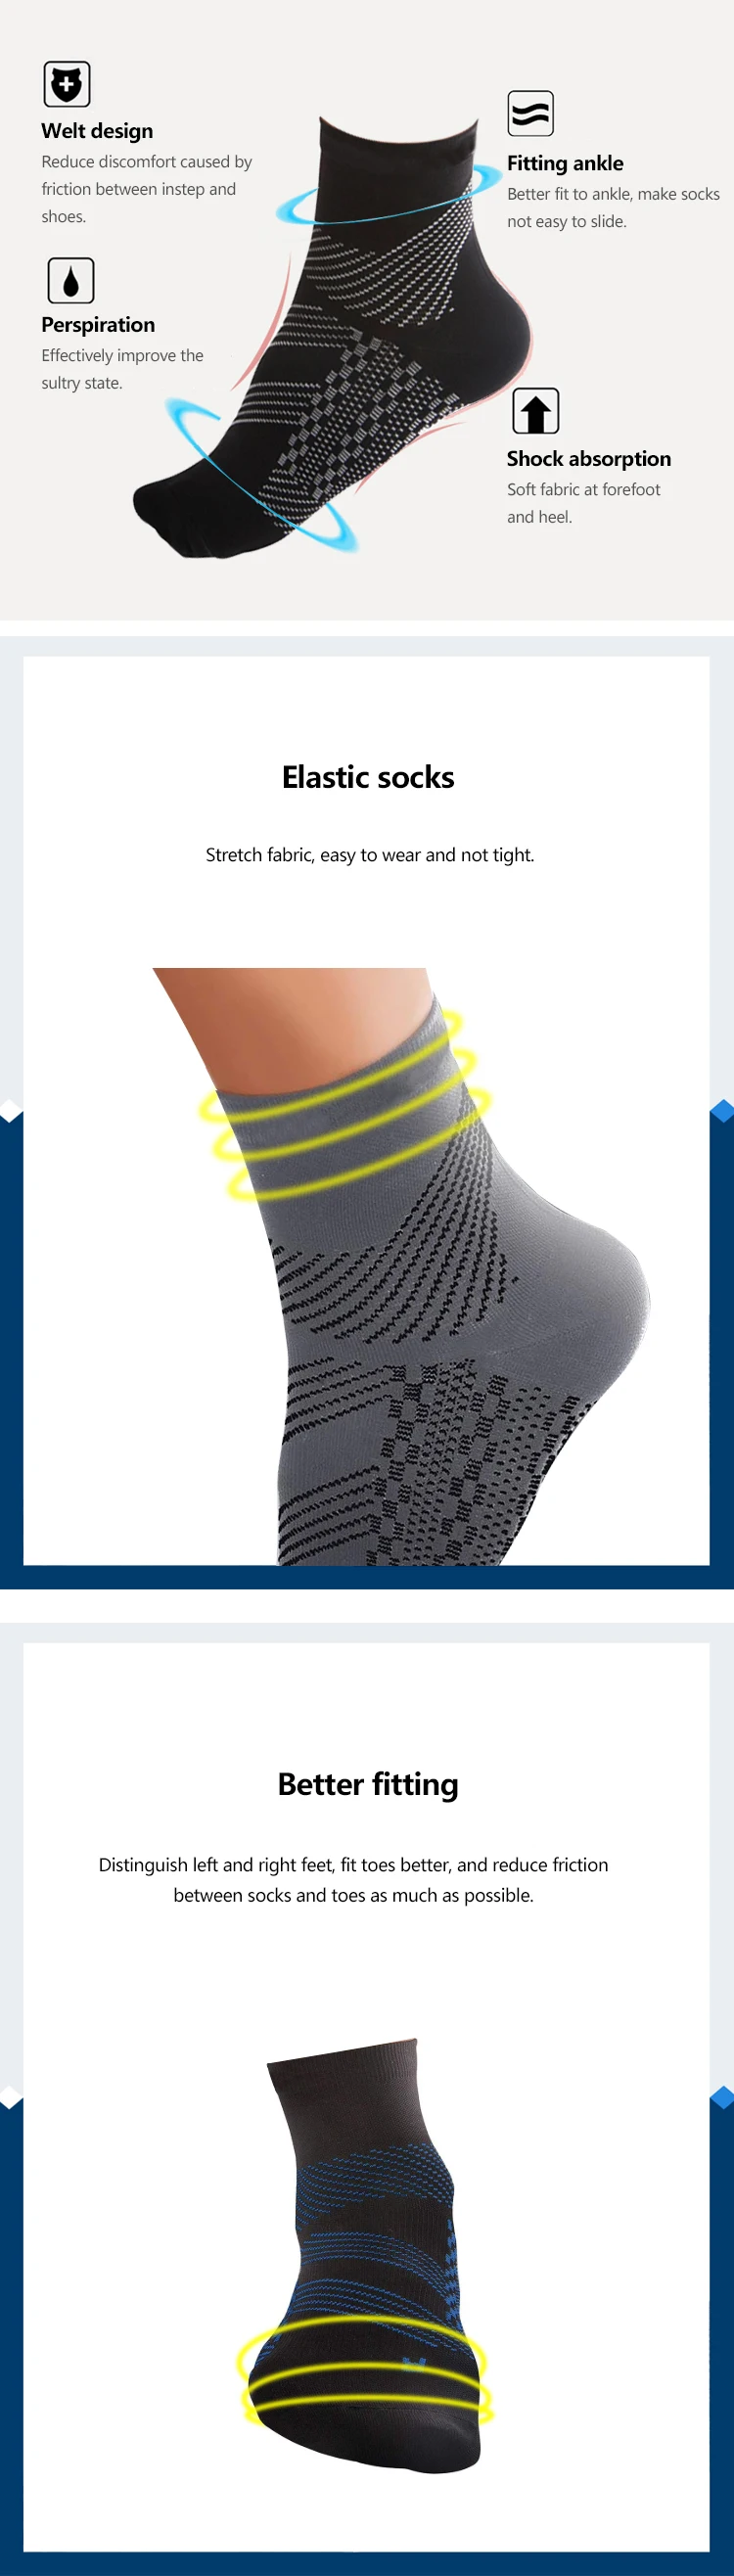 Enerup Zipper Vital Medical Sports Compression Sport Sensory Body Socks Support Knee Stockings Open Toe Beige Wide Calf